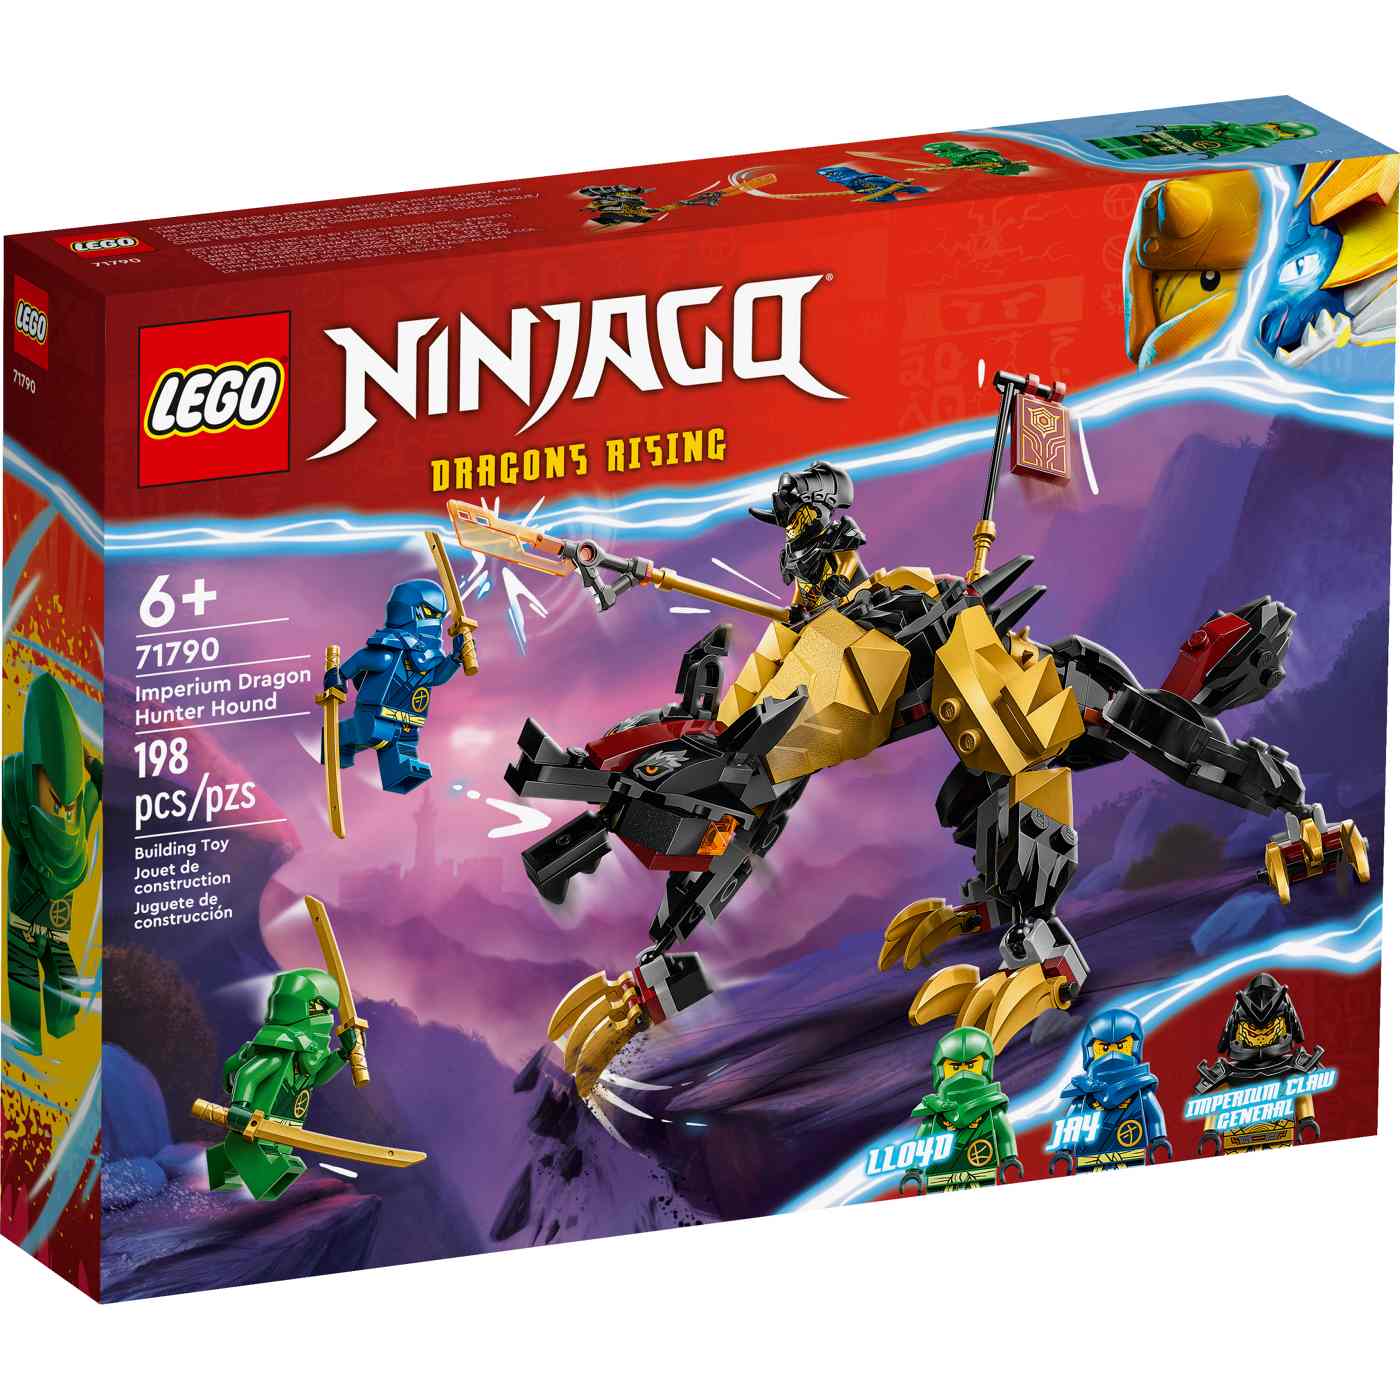 LEGO Ninjago Imperium Dragon Hunter Hound; image 2 of 2